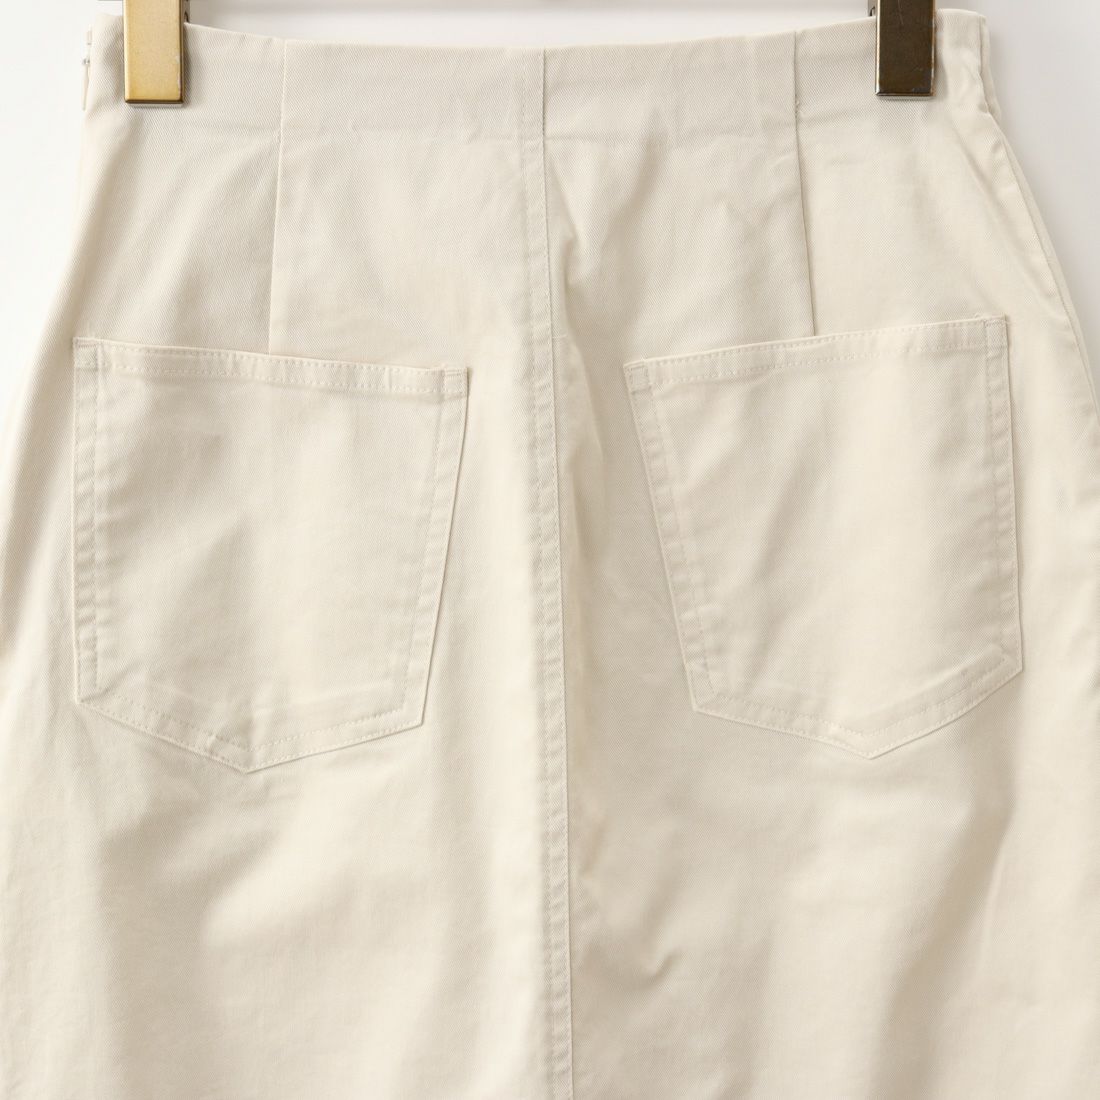 Jeans Factory Clothes [ジーンズファクトリークローズ] コットンストレッチタイトベイカースカート [ISJF-01] NATURAL